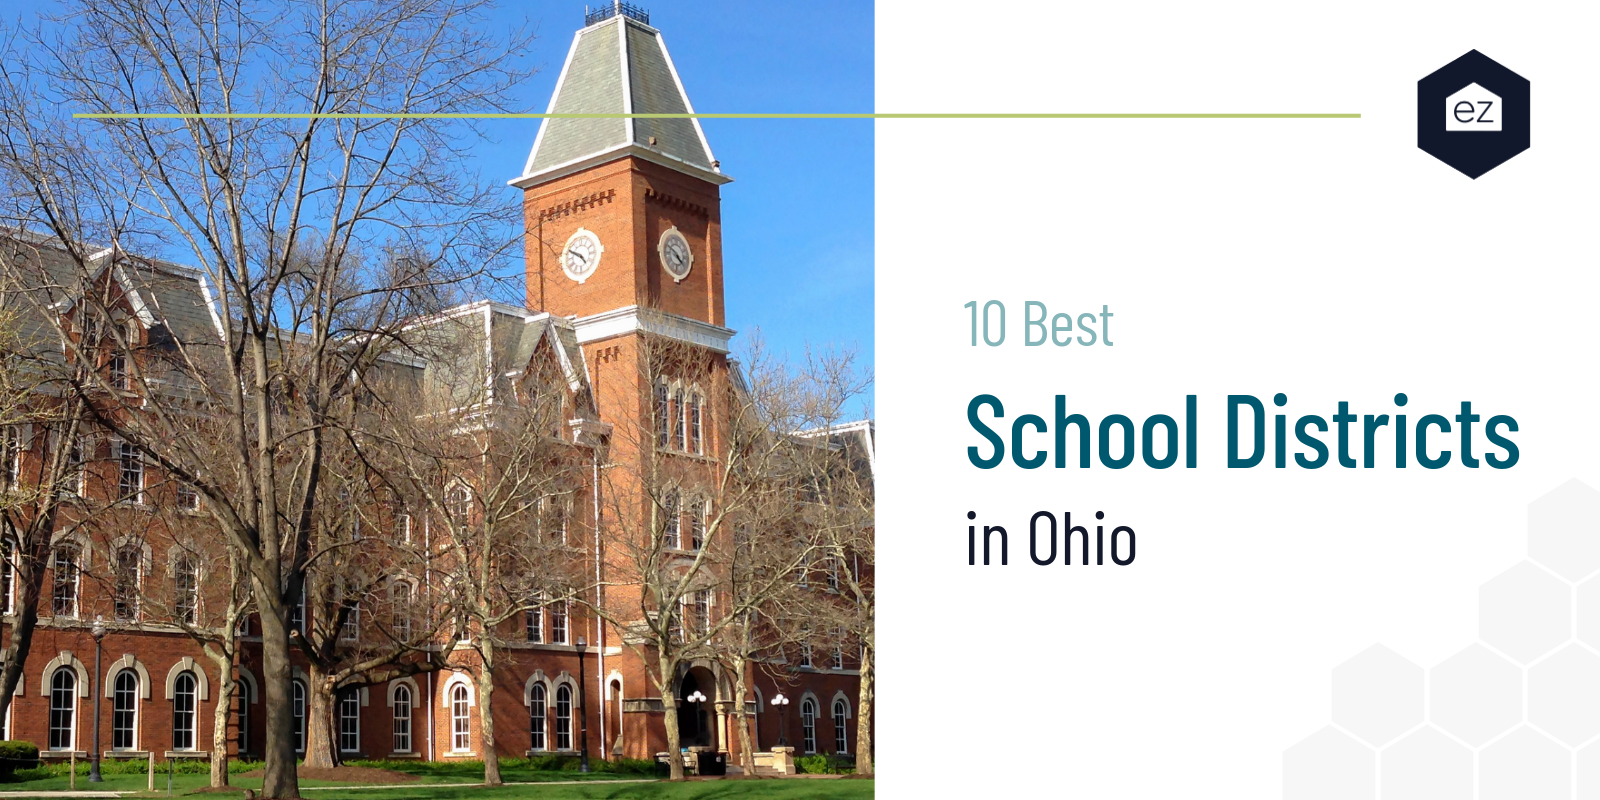 School District in Ohio, USA